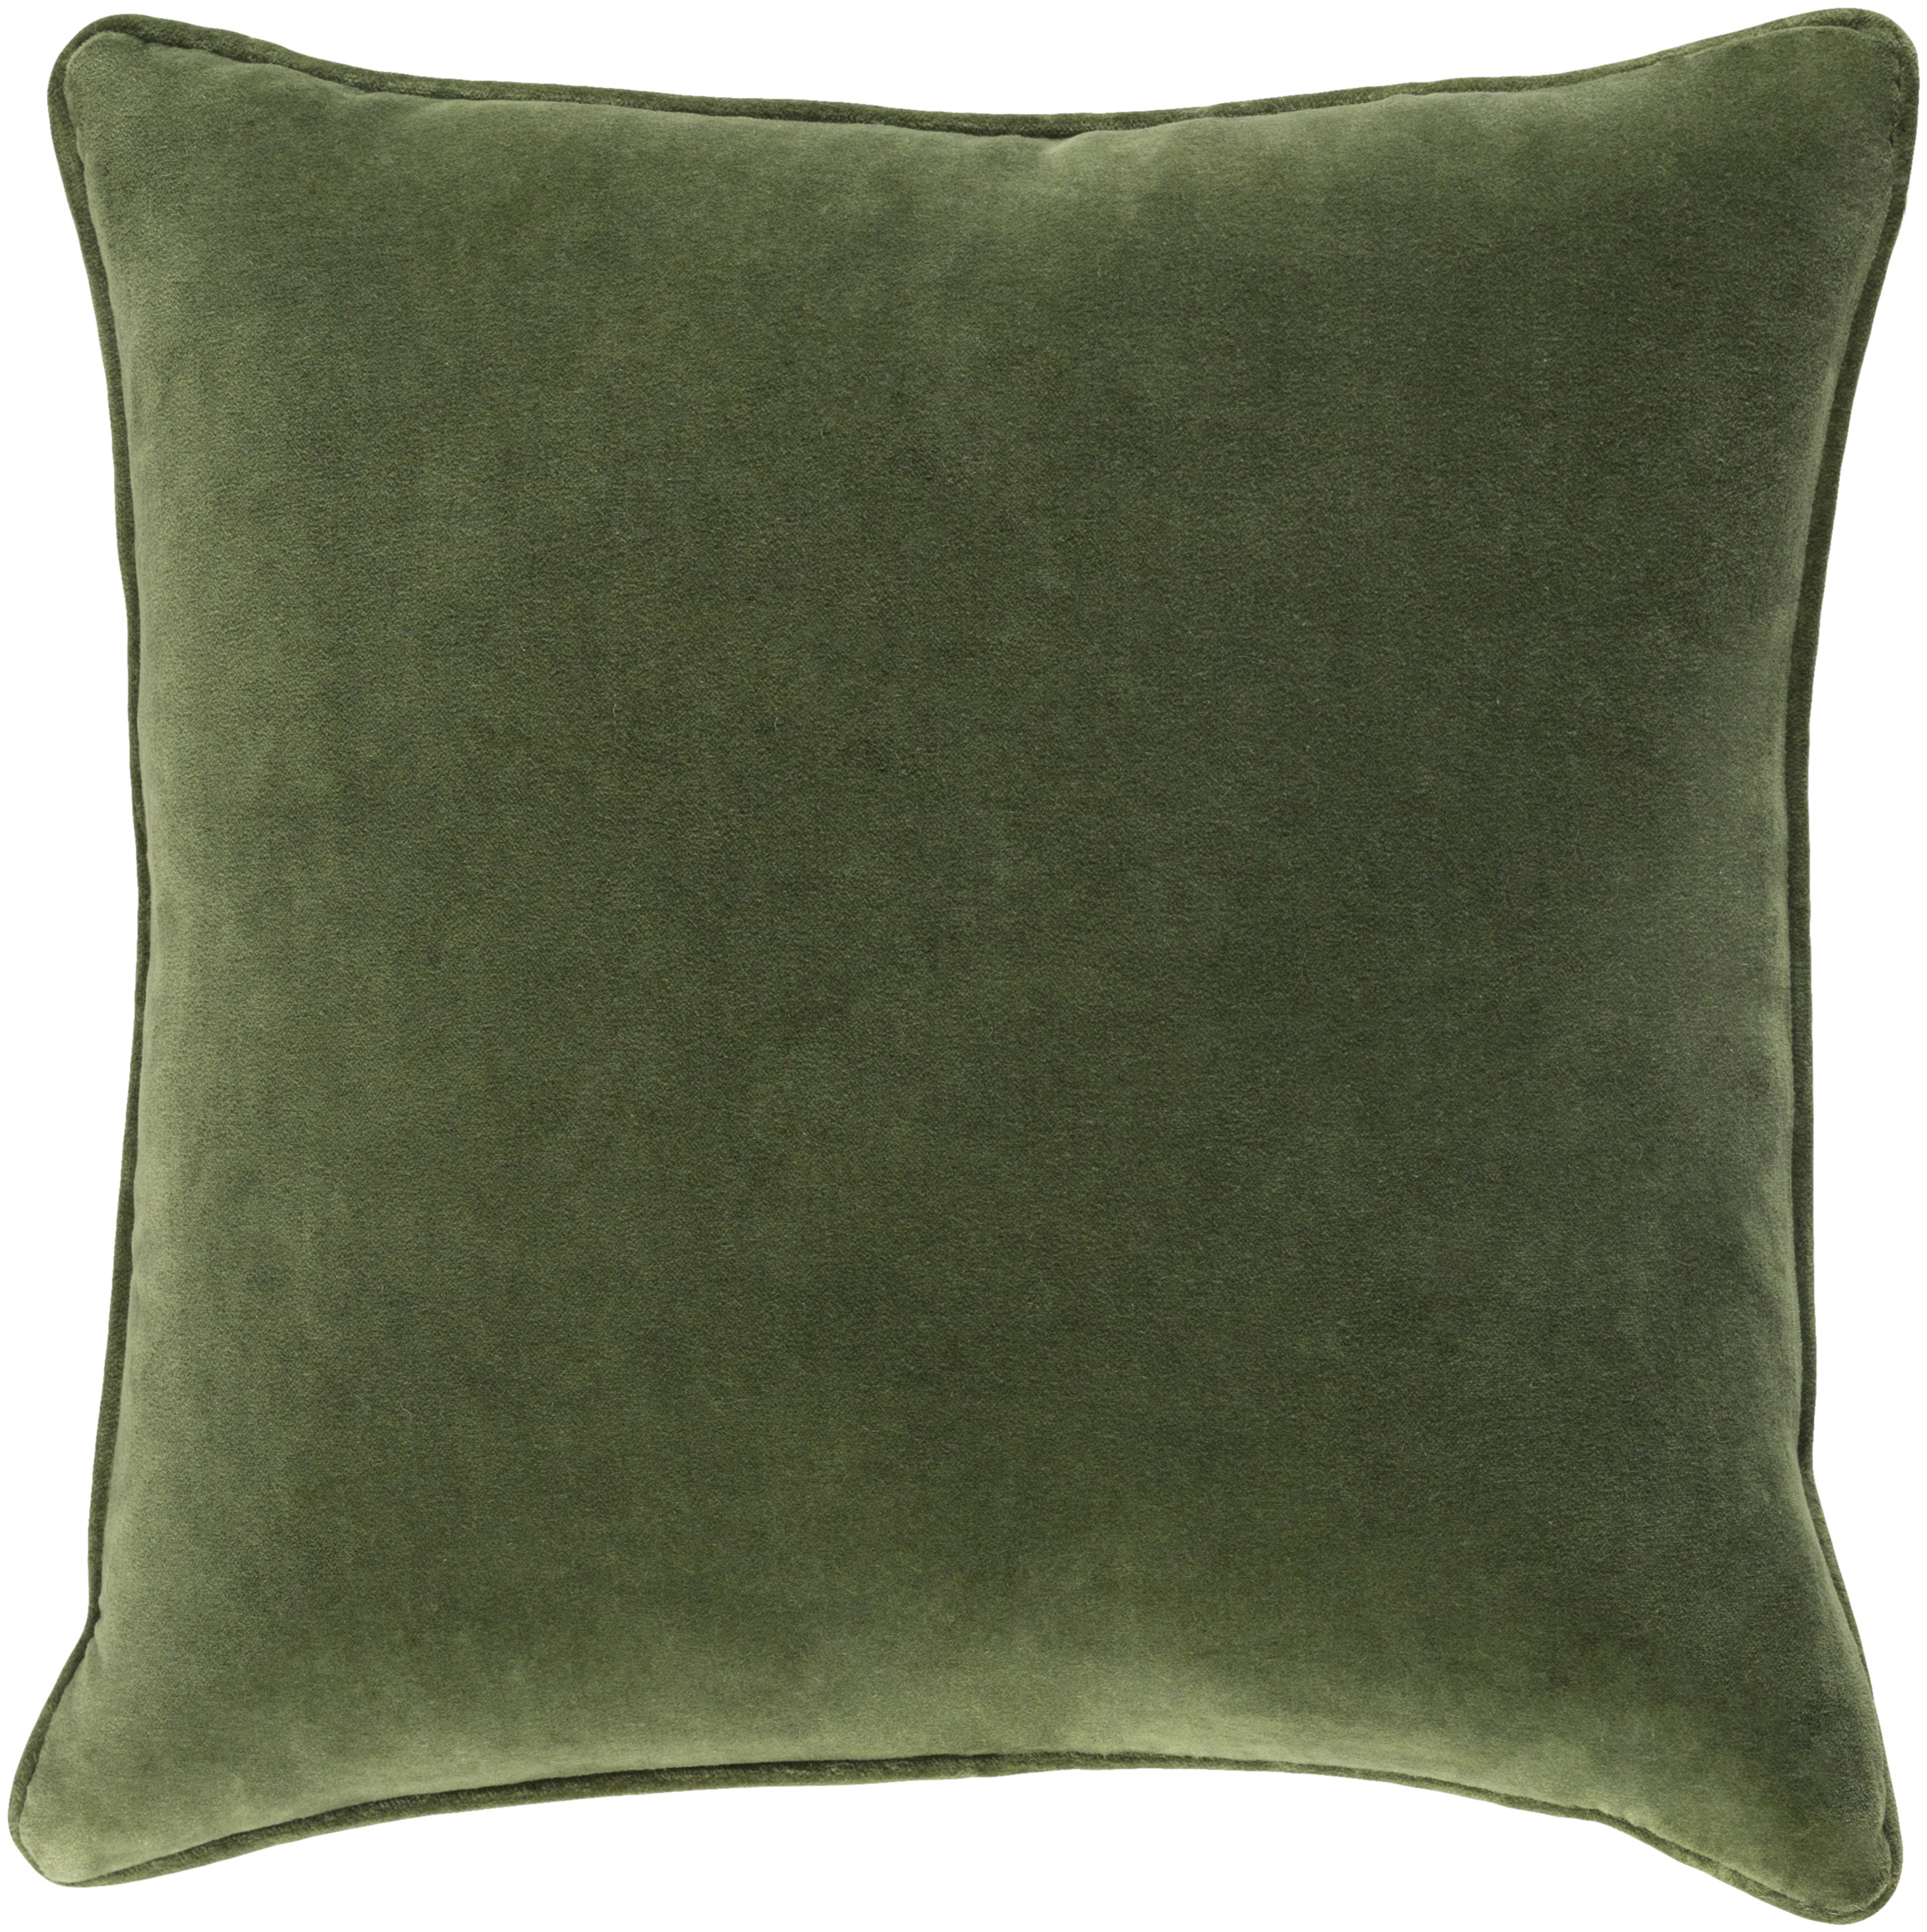 Safflower Throw Pillow, 22" x 22", with down insert - Surya